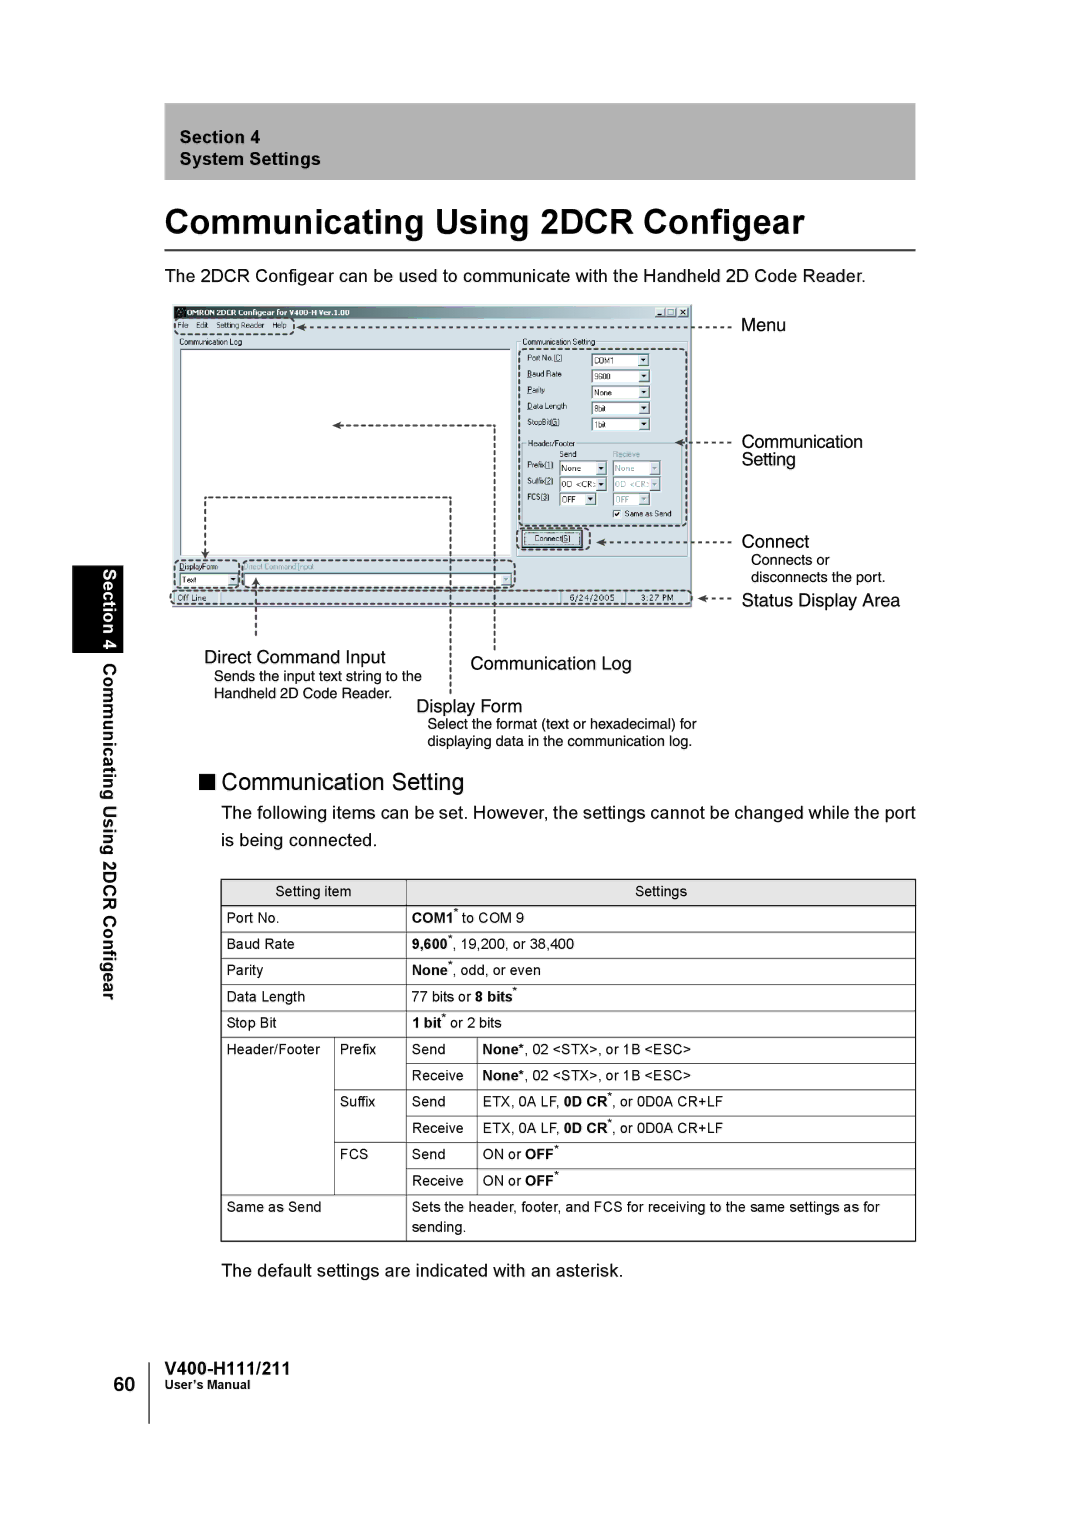 Omron V400-H111 user manual Communicating Using 2DCR Configear, Communication Setting 